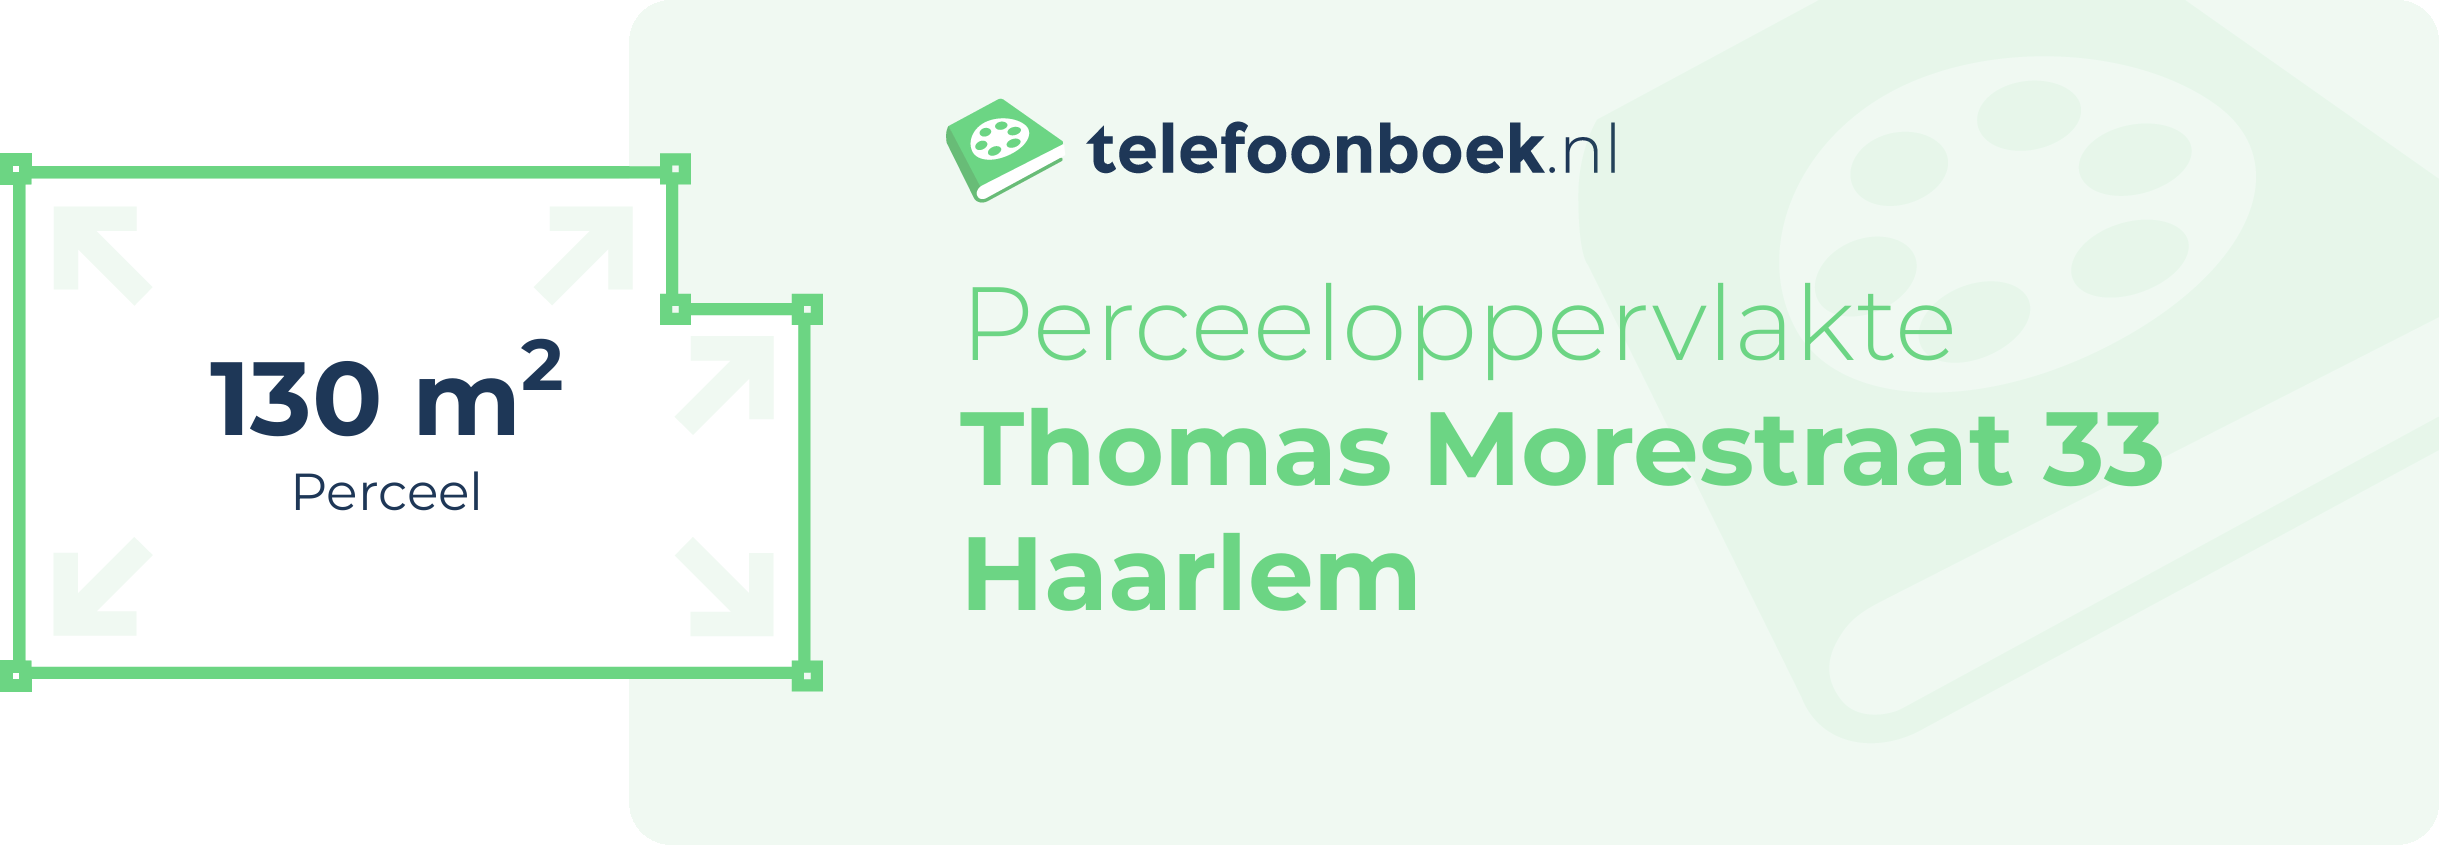 Perceeloppervlakte Thomas Morestraat 33 Haarlem